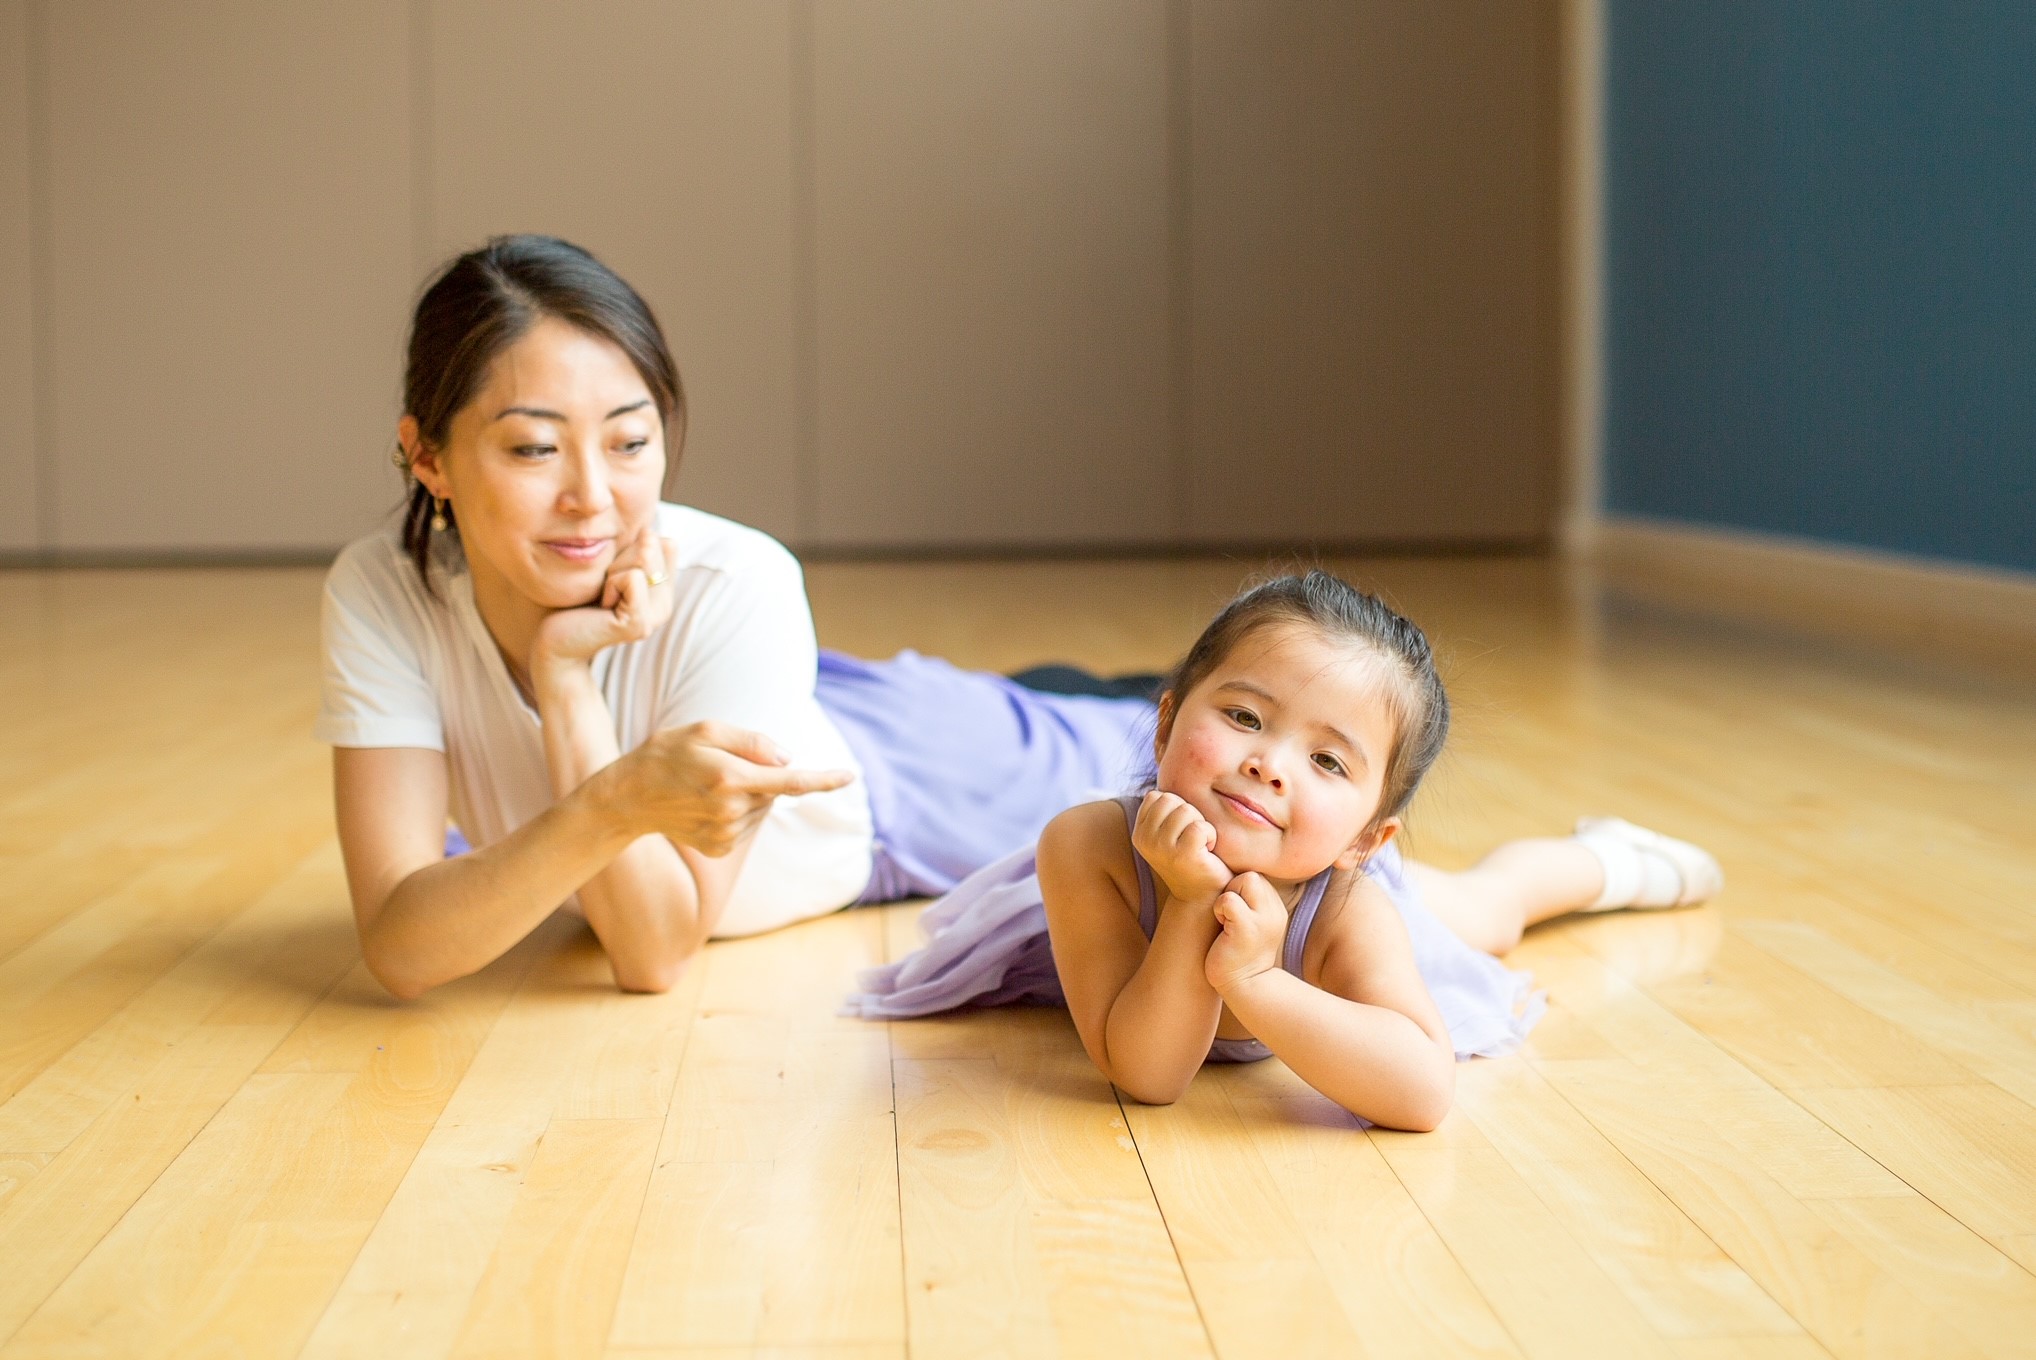 Kei and a young girl lying on the floor of dance studio